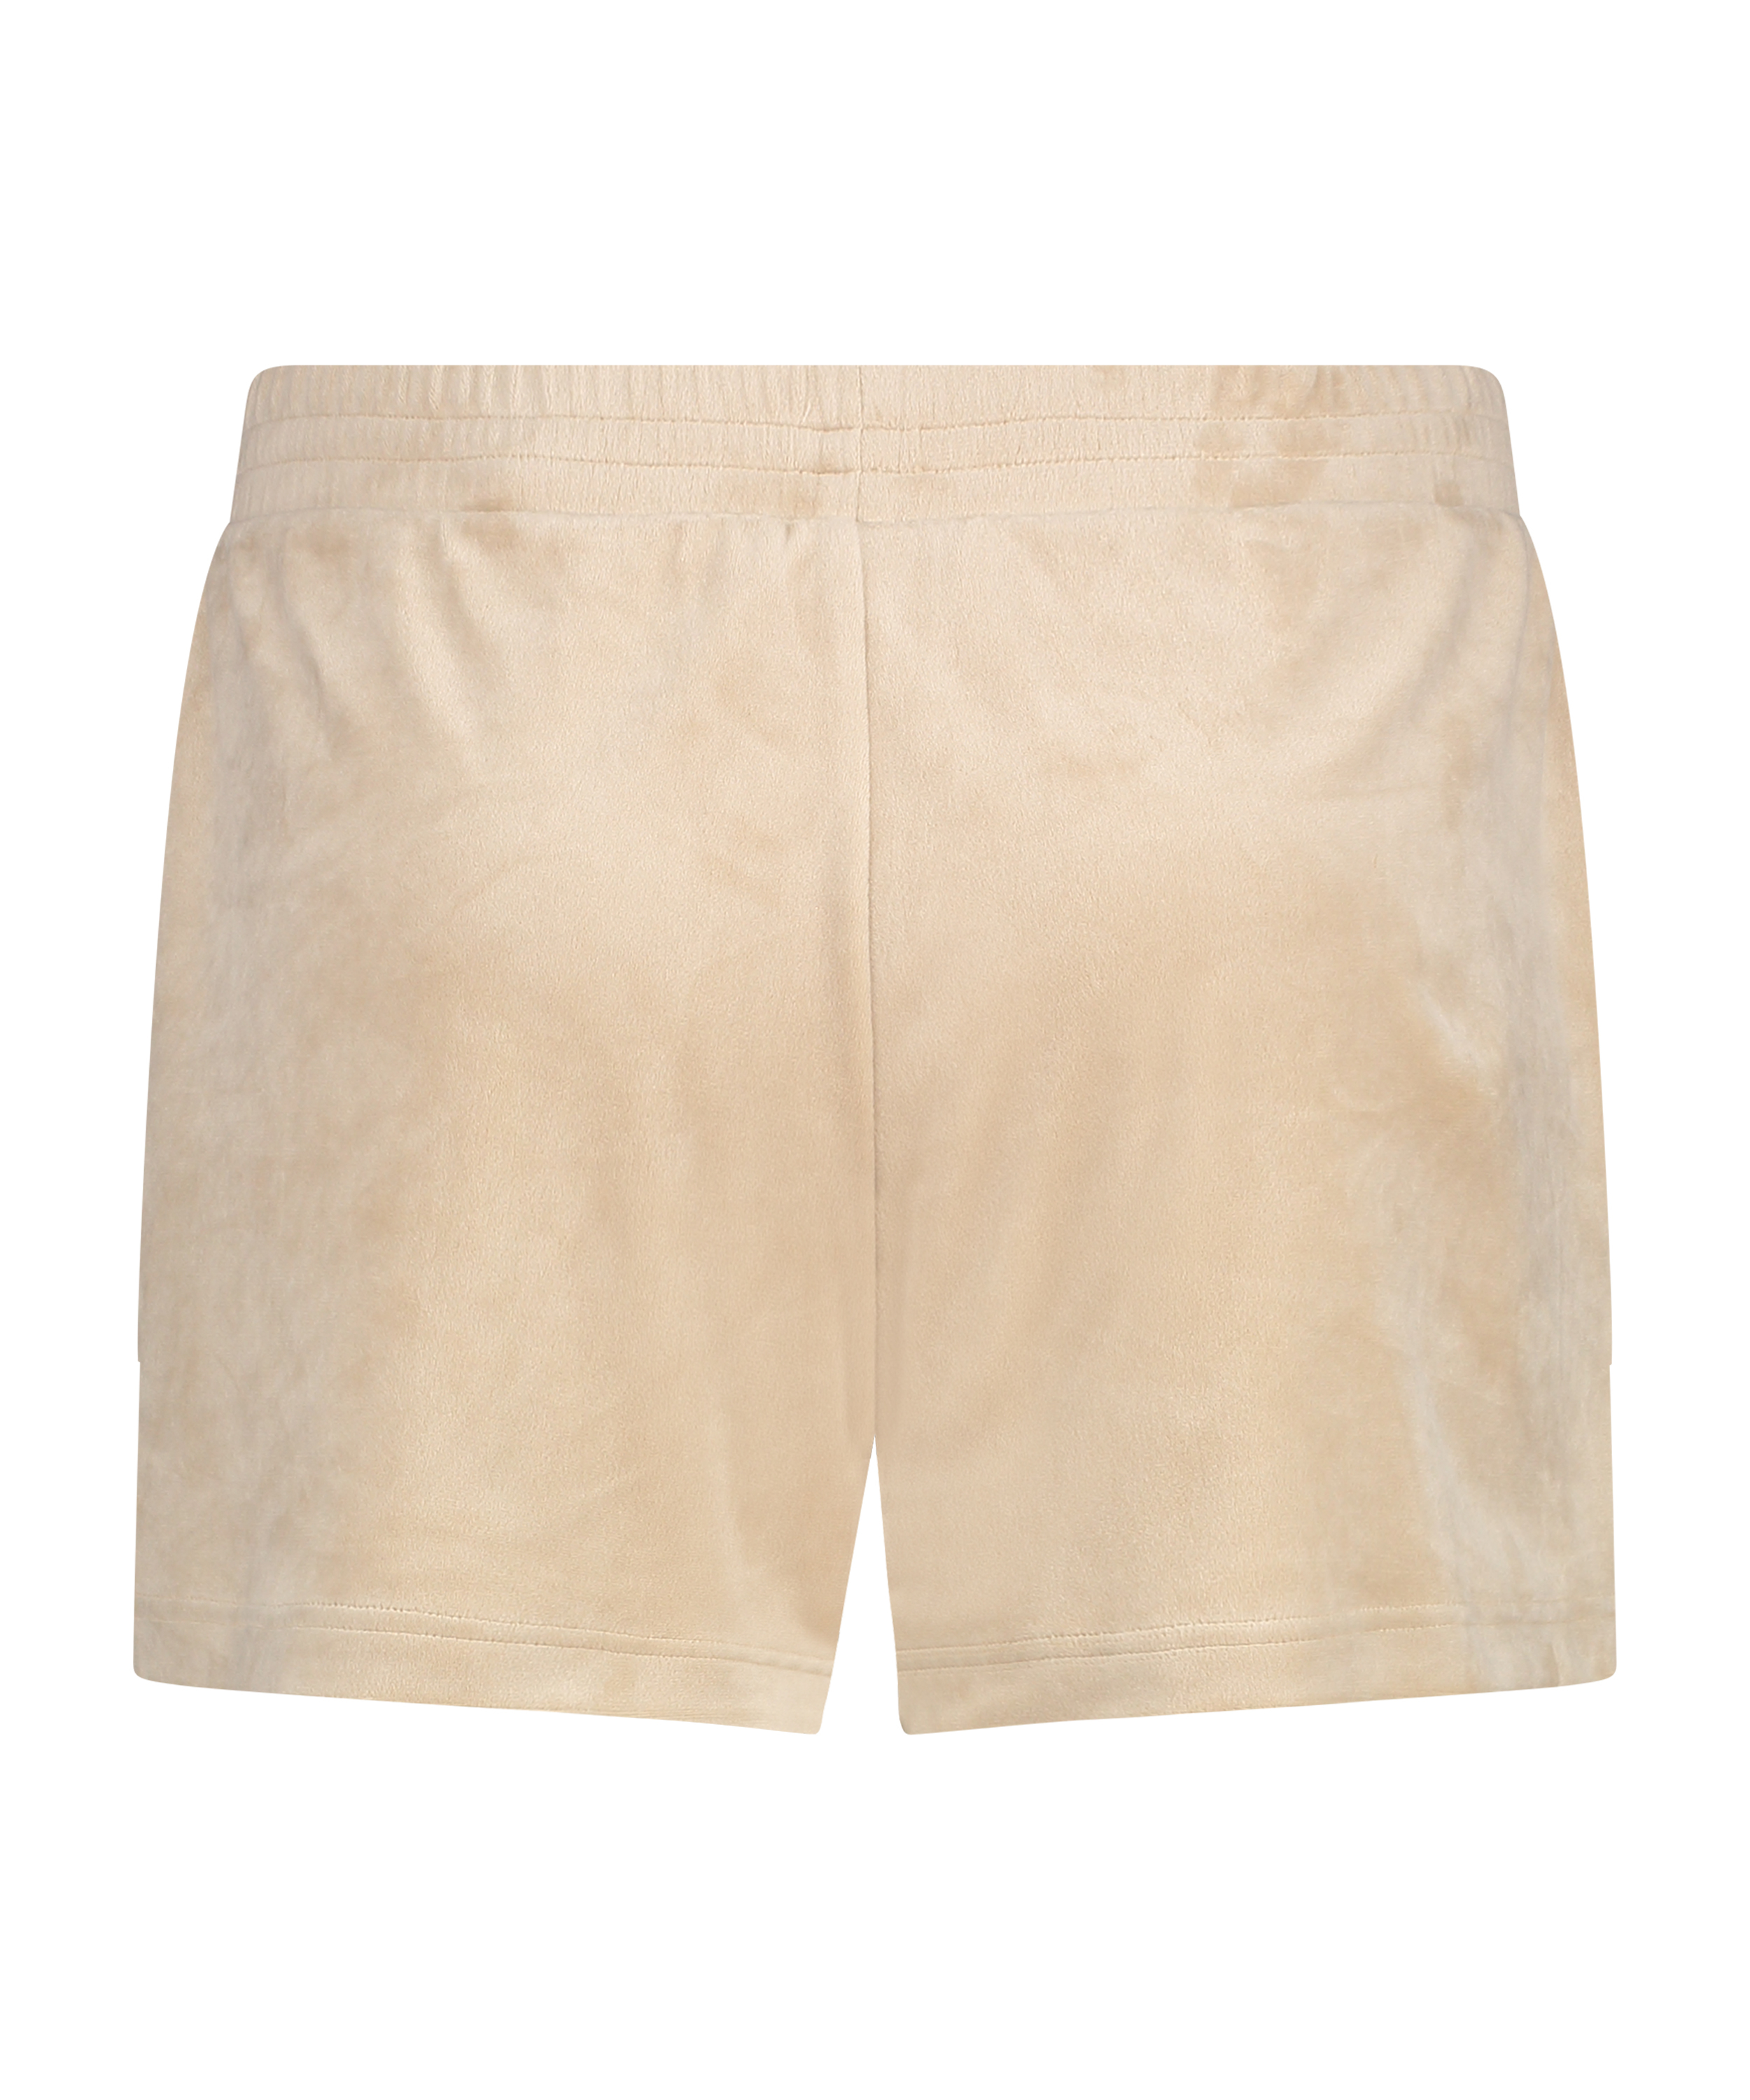 Velours Pocket shorts, Beige, main